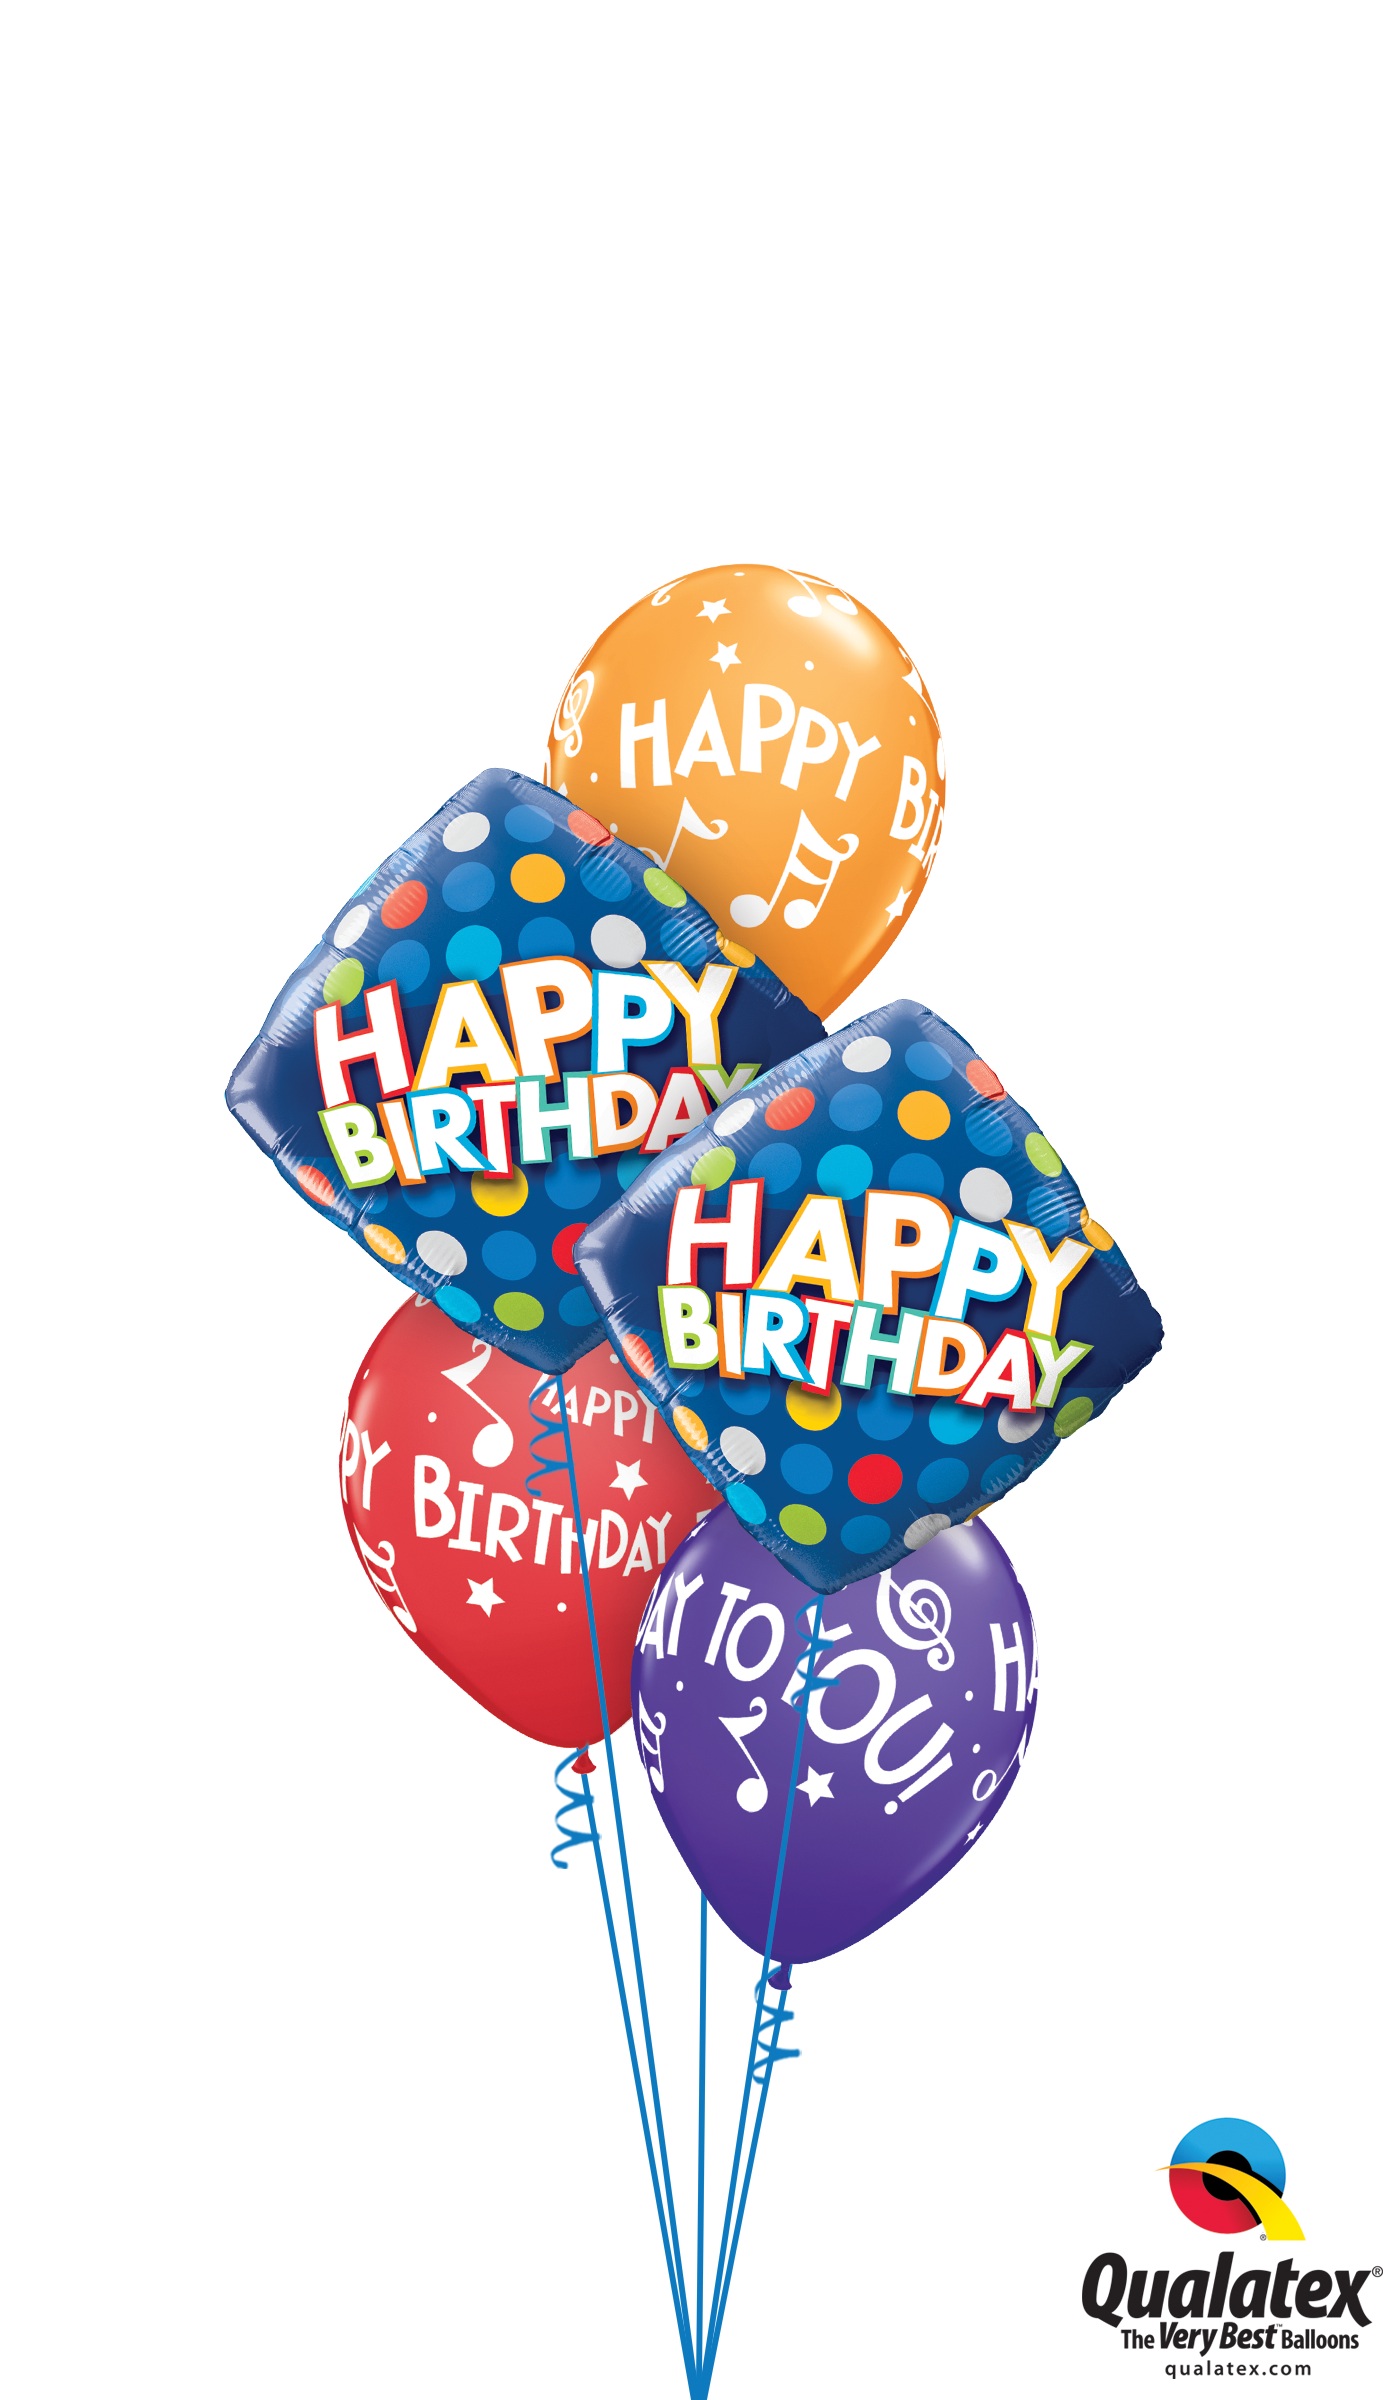 A Very Happy & Musical Birthday - U Pick Parties